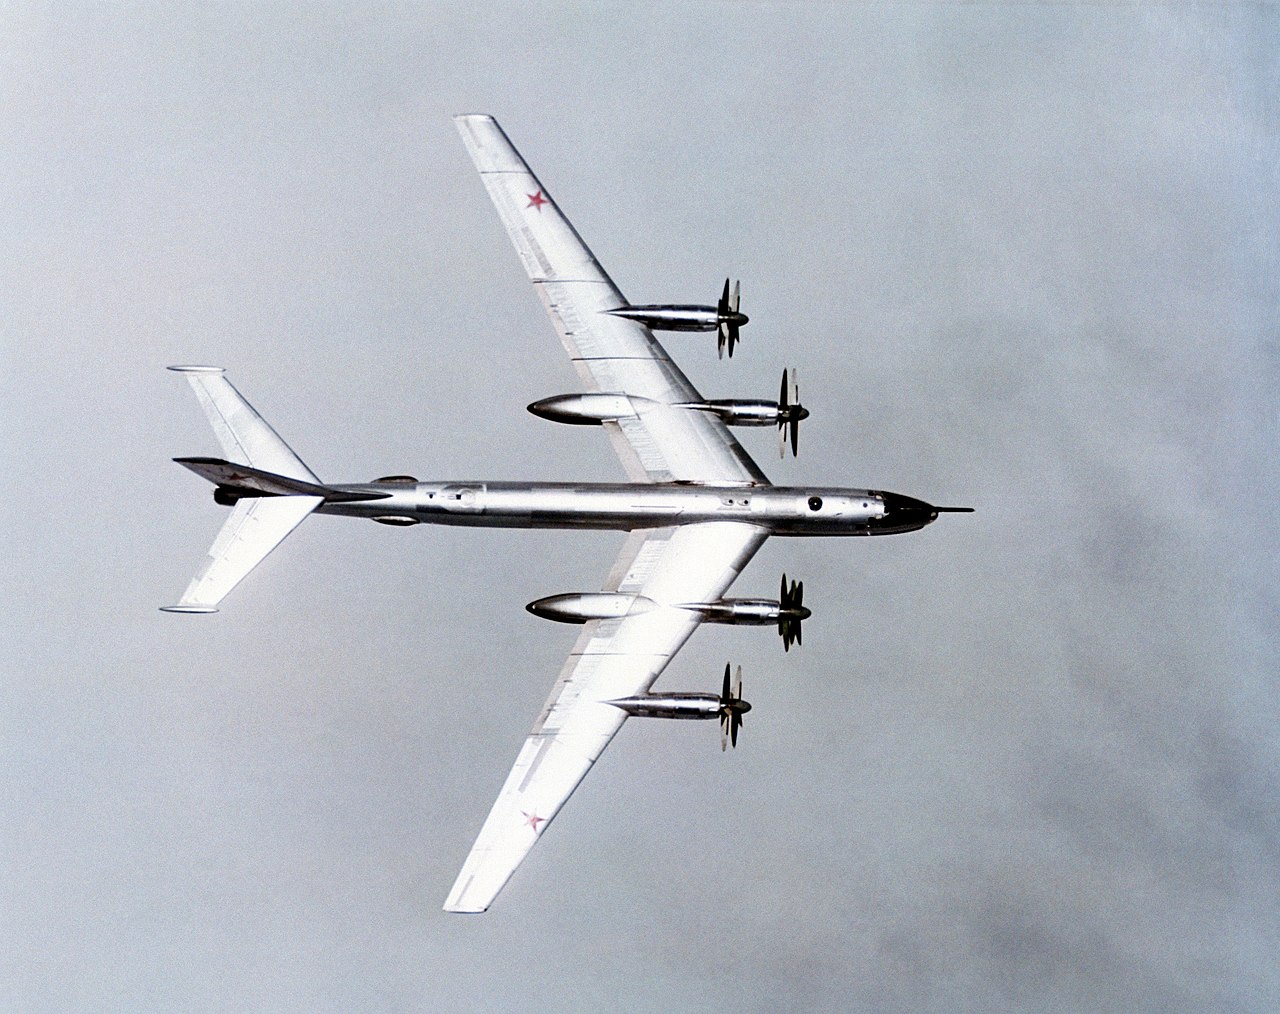 Tupolev Tu-95 / Tu-142 (Bear)